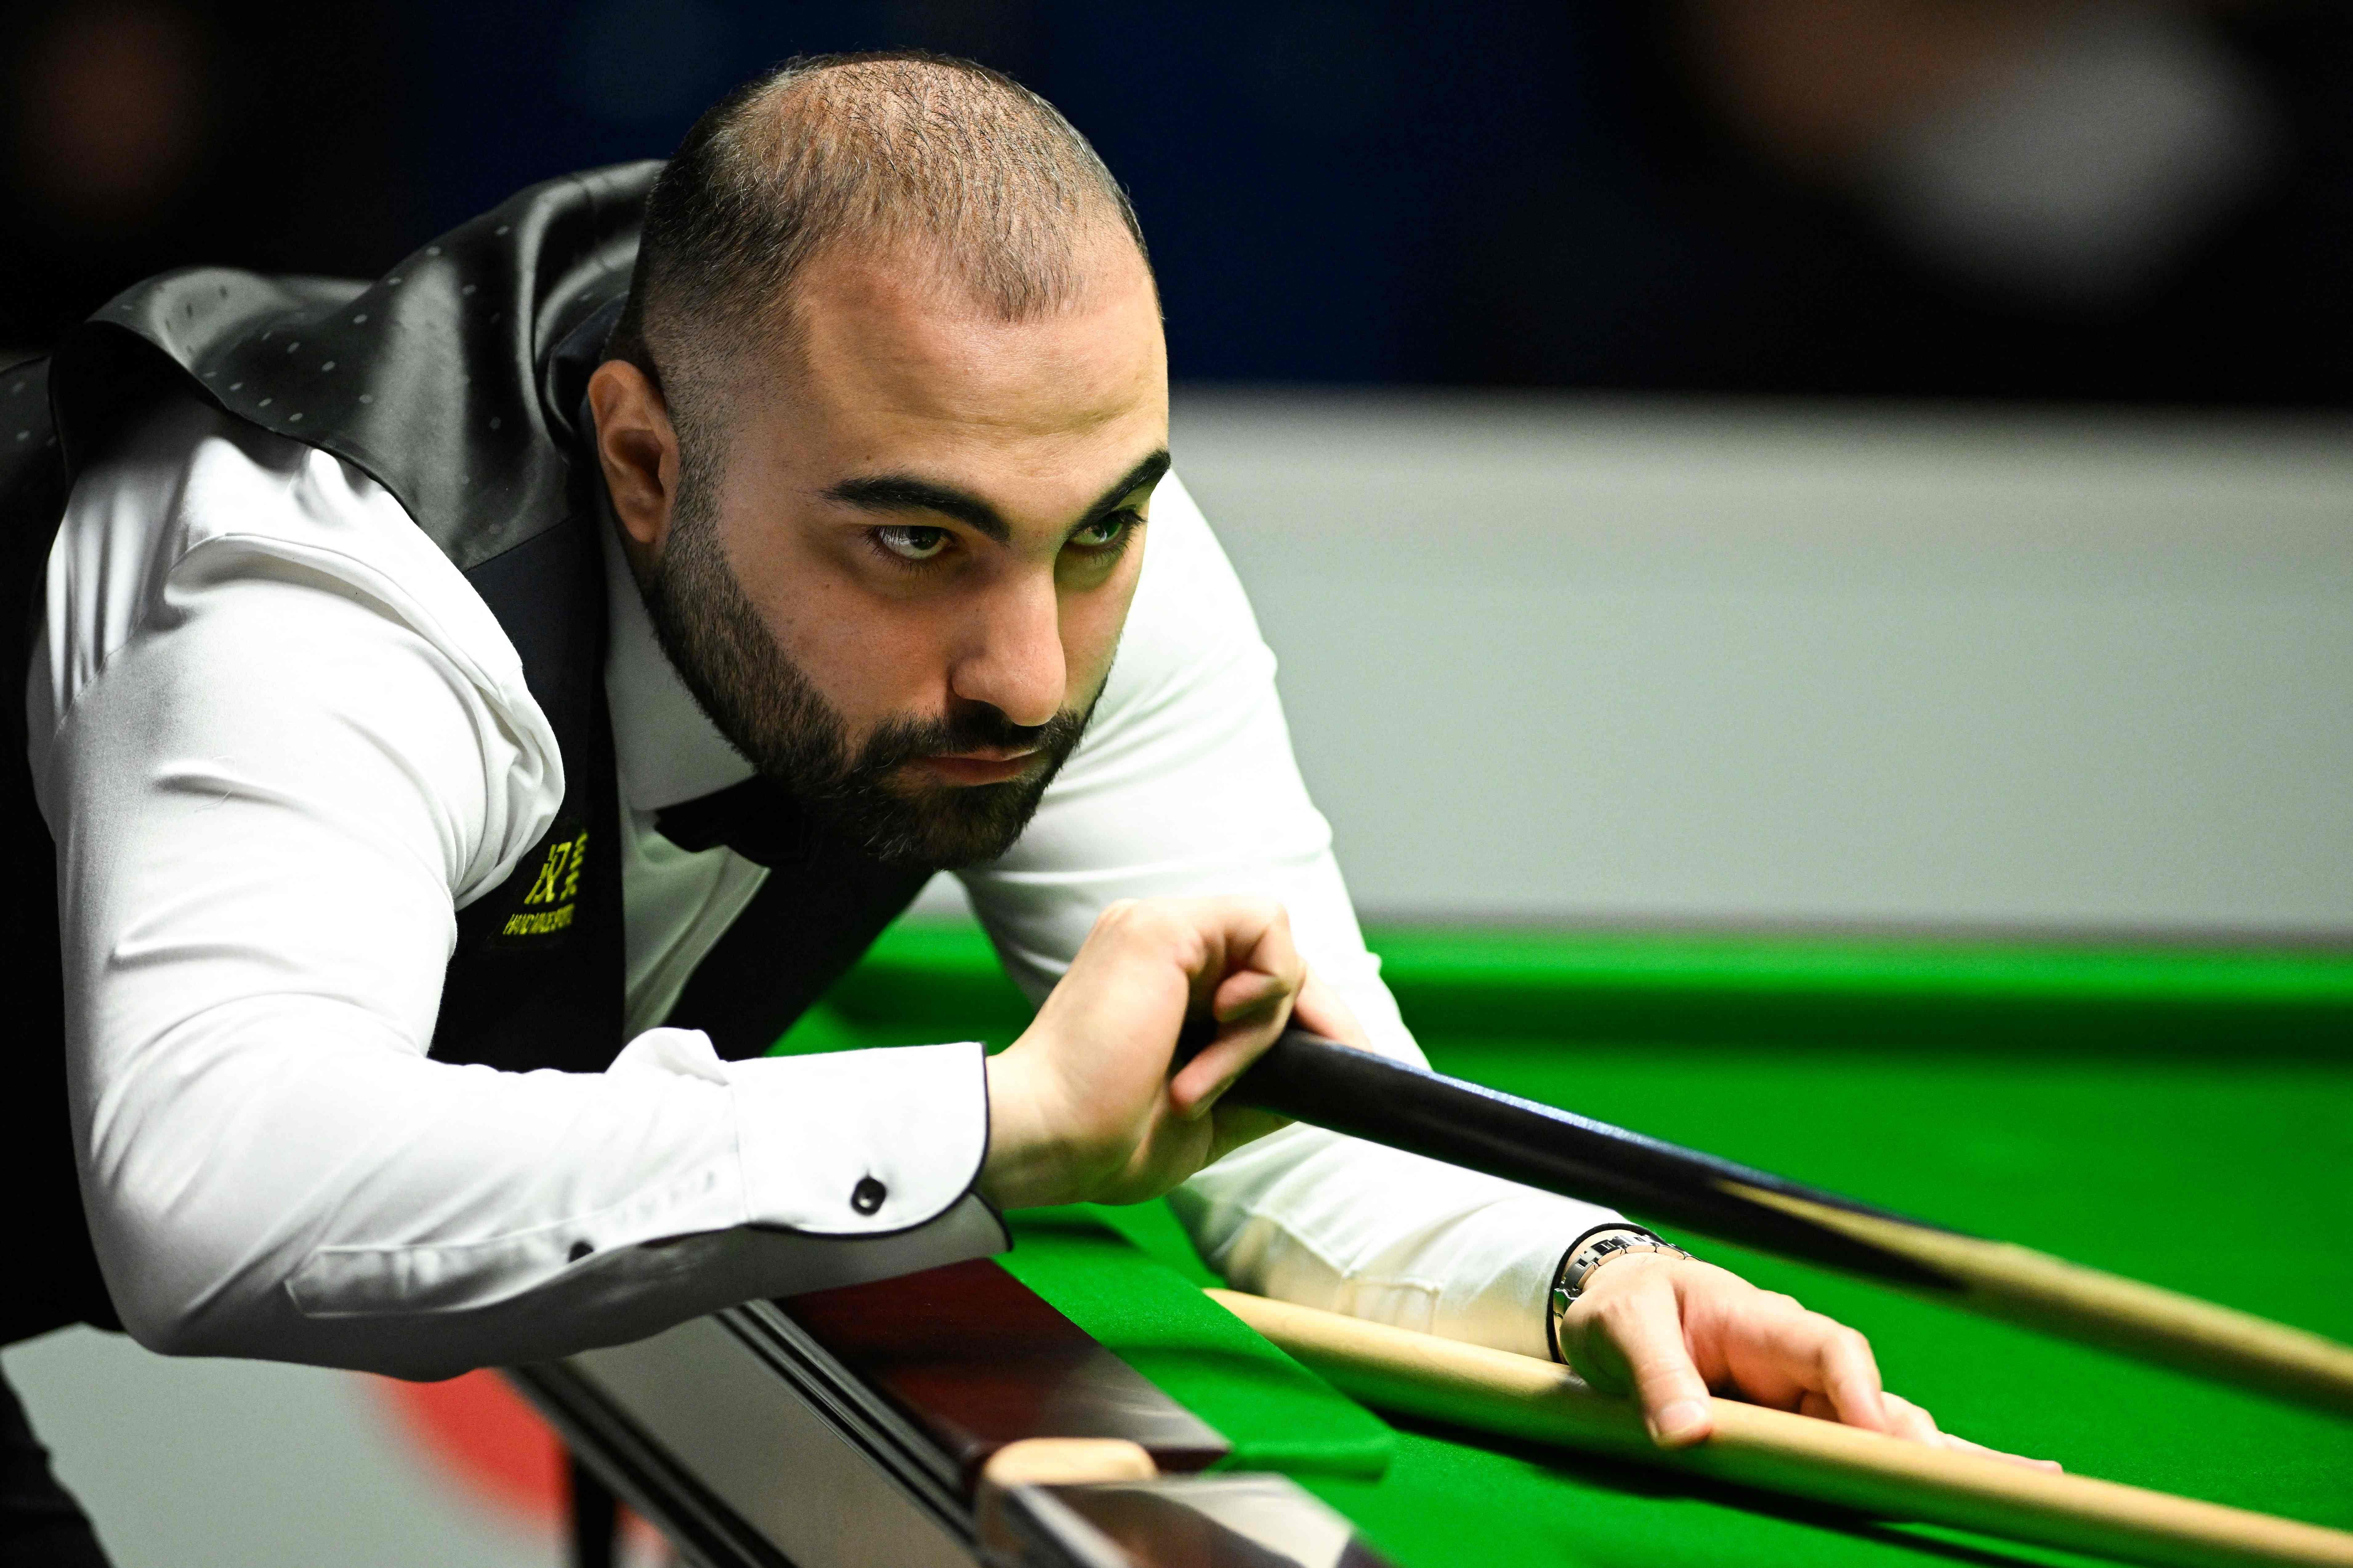 World Snooker Championship venue ‘smells’, says Iran’s Hossein Vafaei